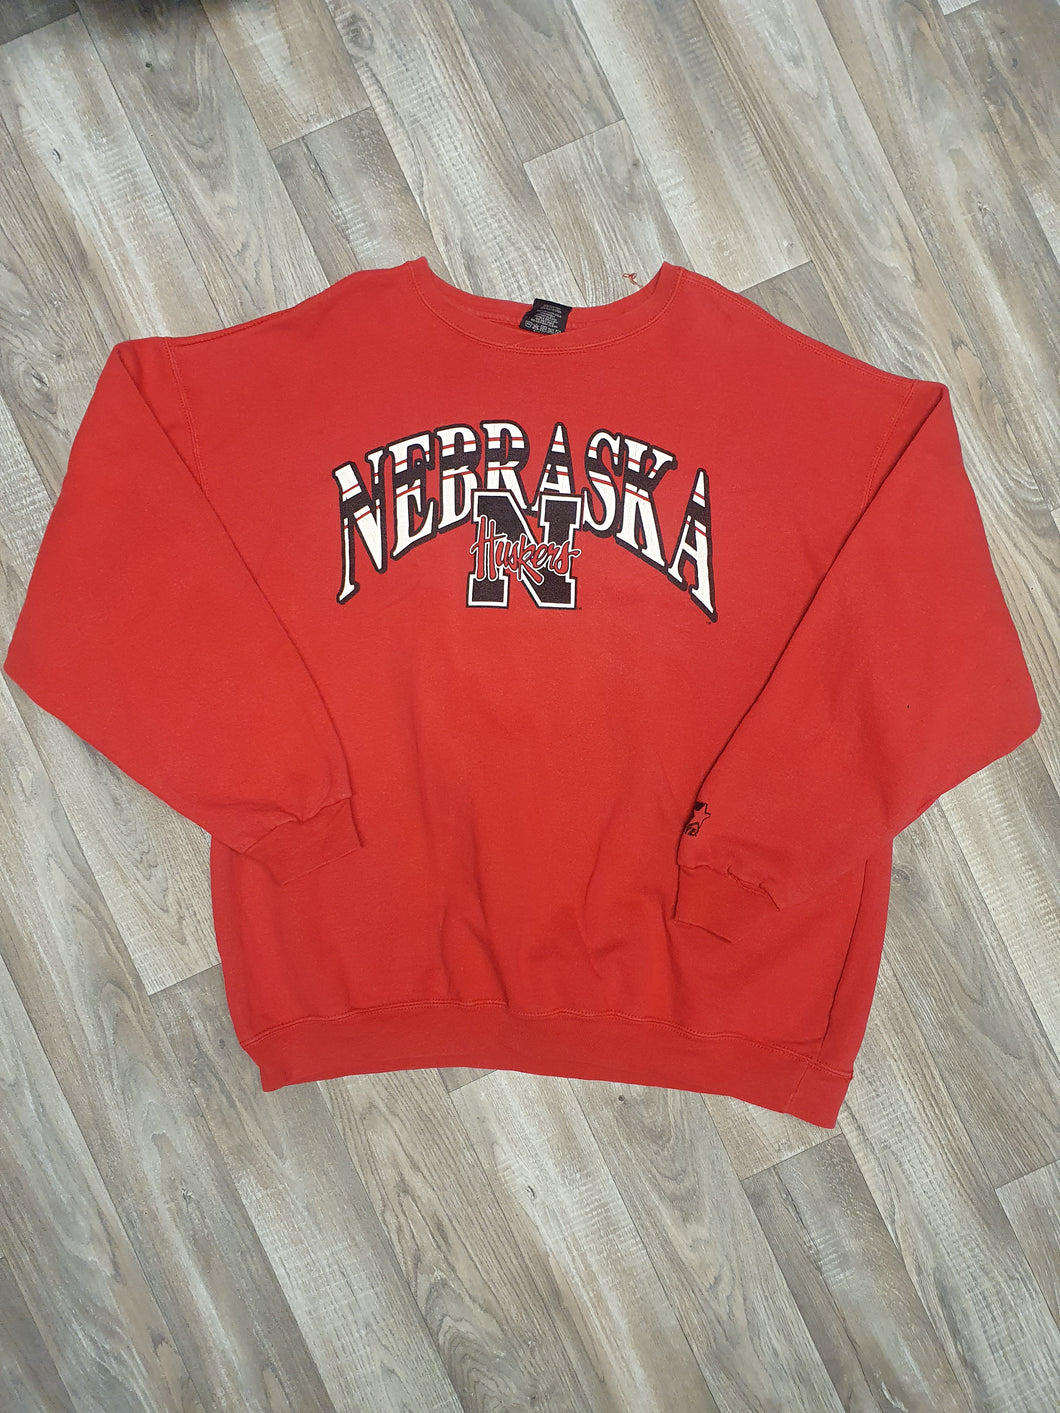 Nebraska Cornhuskers Sweater Size XL